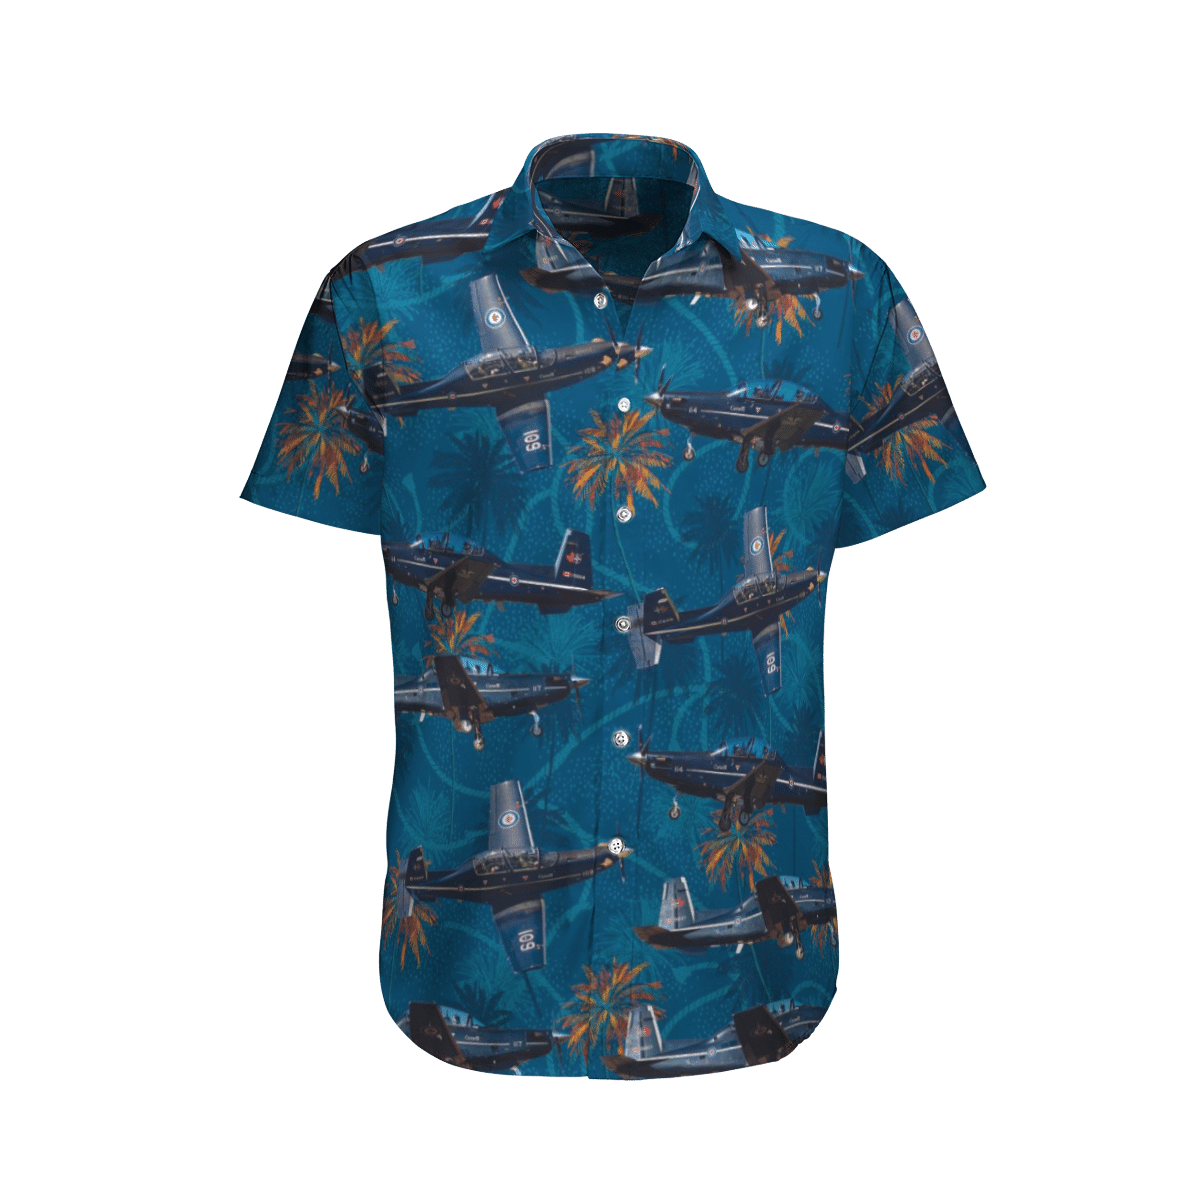 Get a new Hawaiian shirt to enjoy summer vacation 153